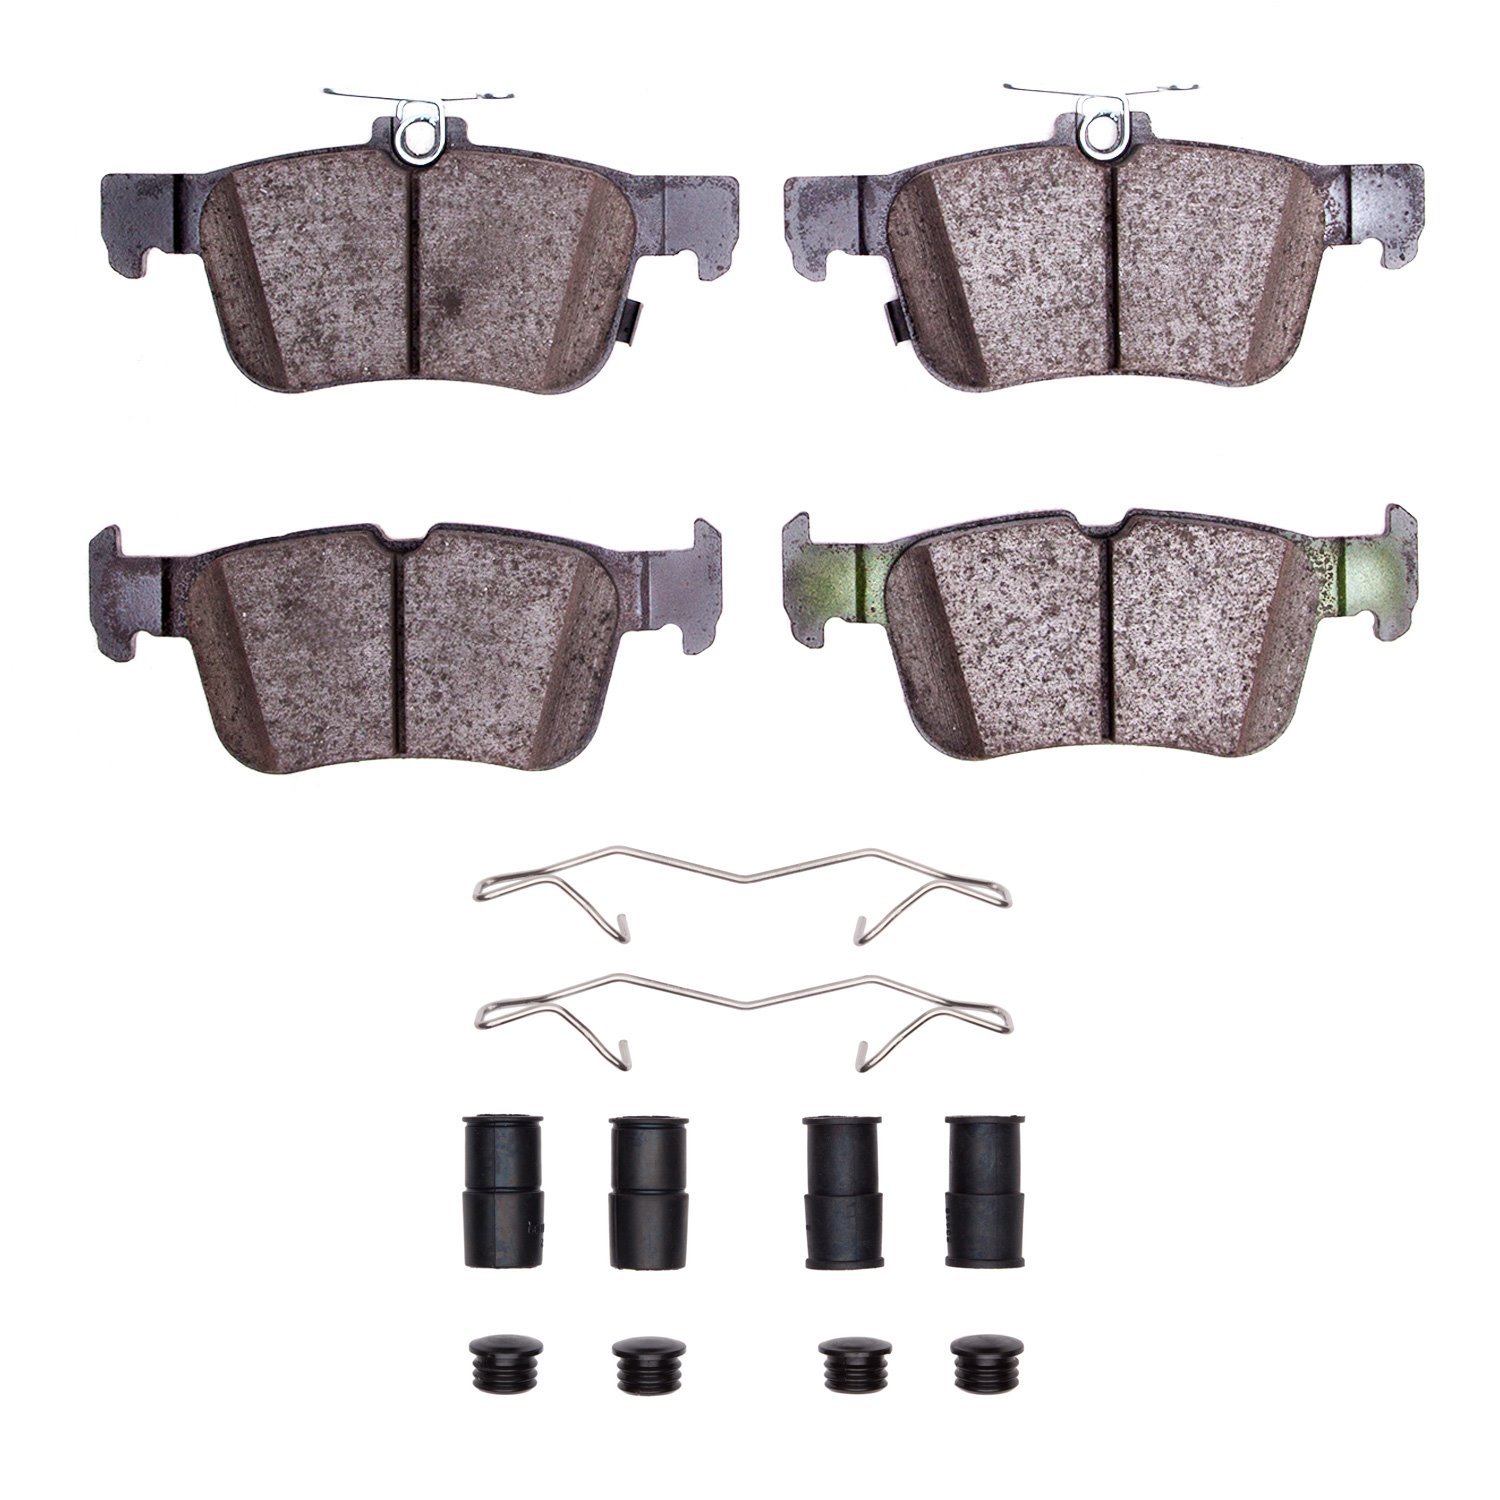 1551-1665-11 5000 Advanced Ceramic Brake Pads & Hardware Kit, Fits Select Ford/Lincoln/Mercury/Mazda, Position: Rear